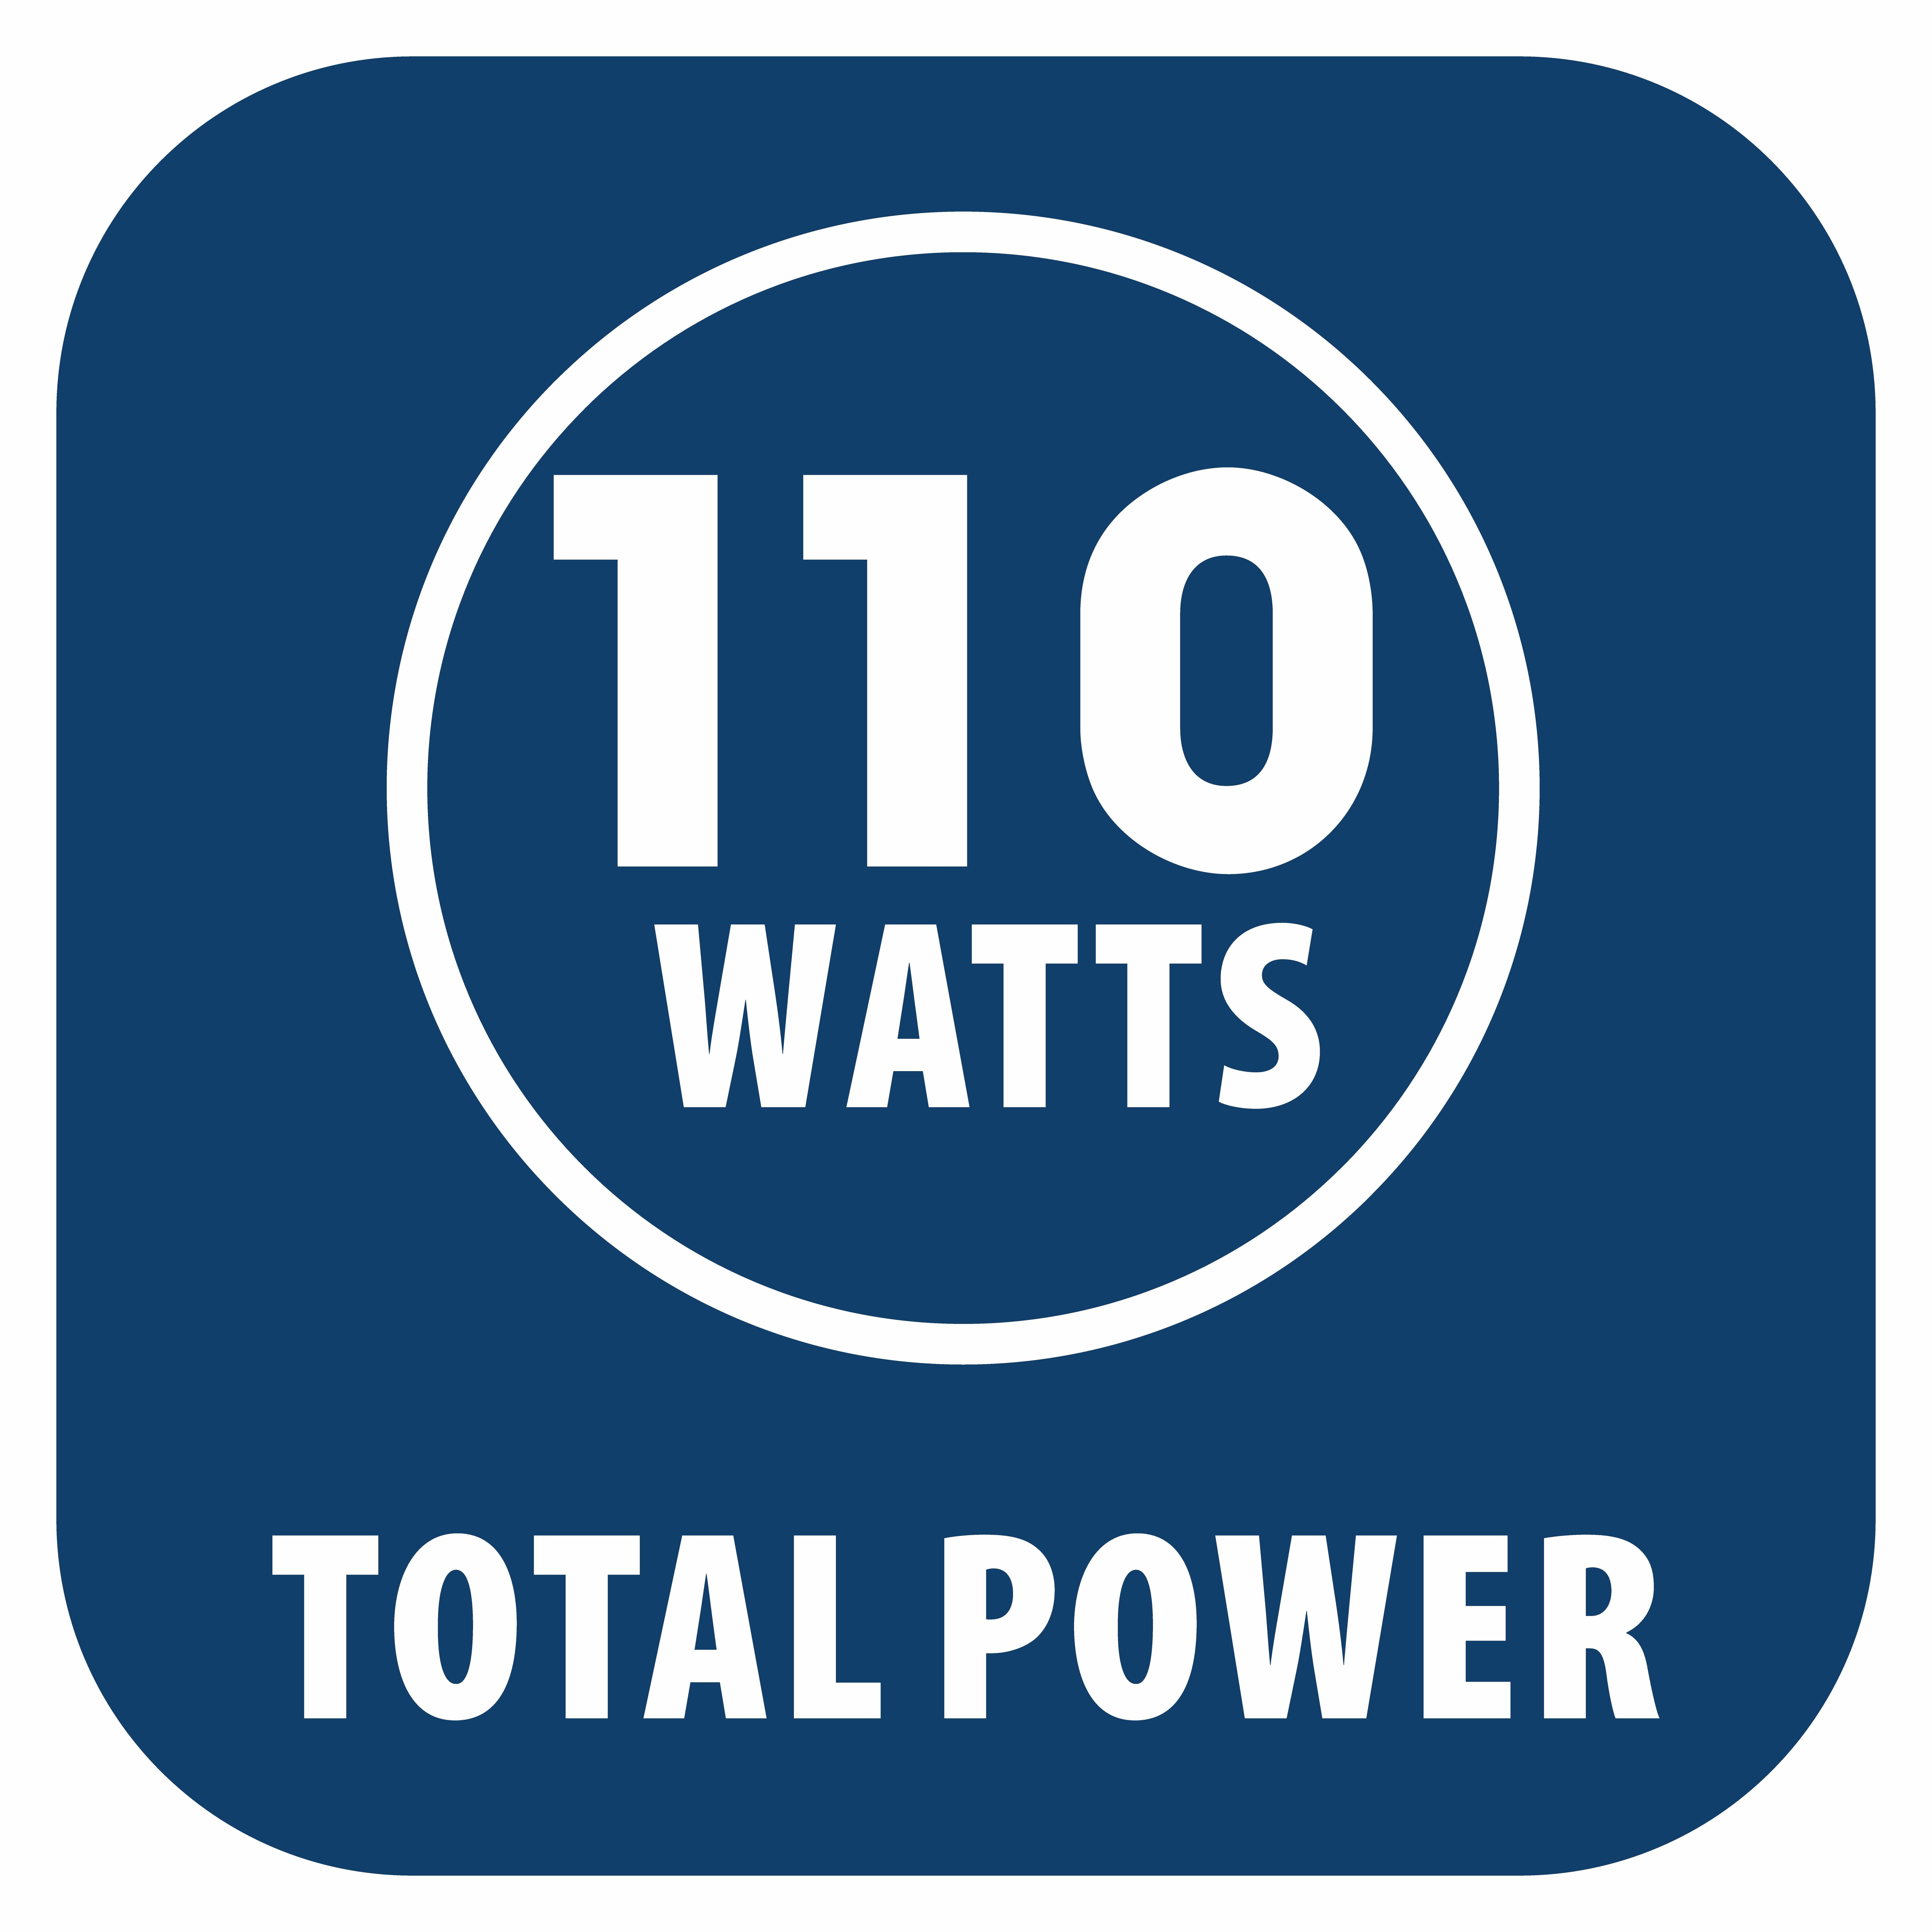 110 Watts total power